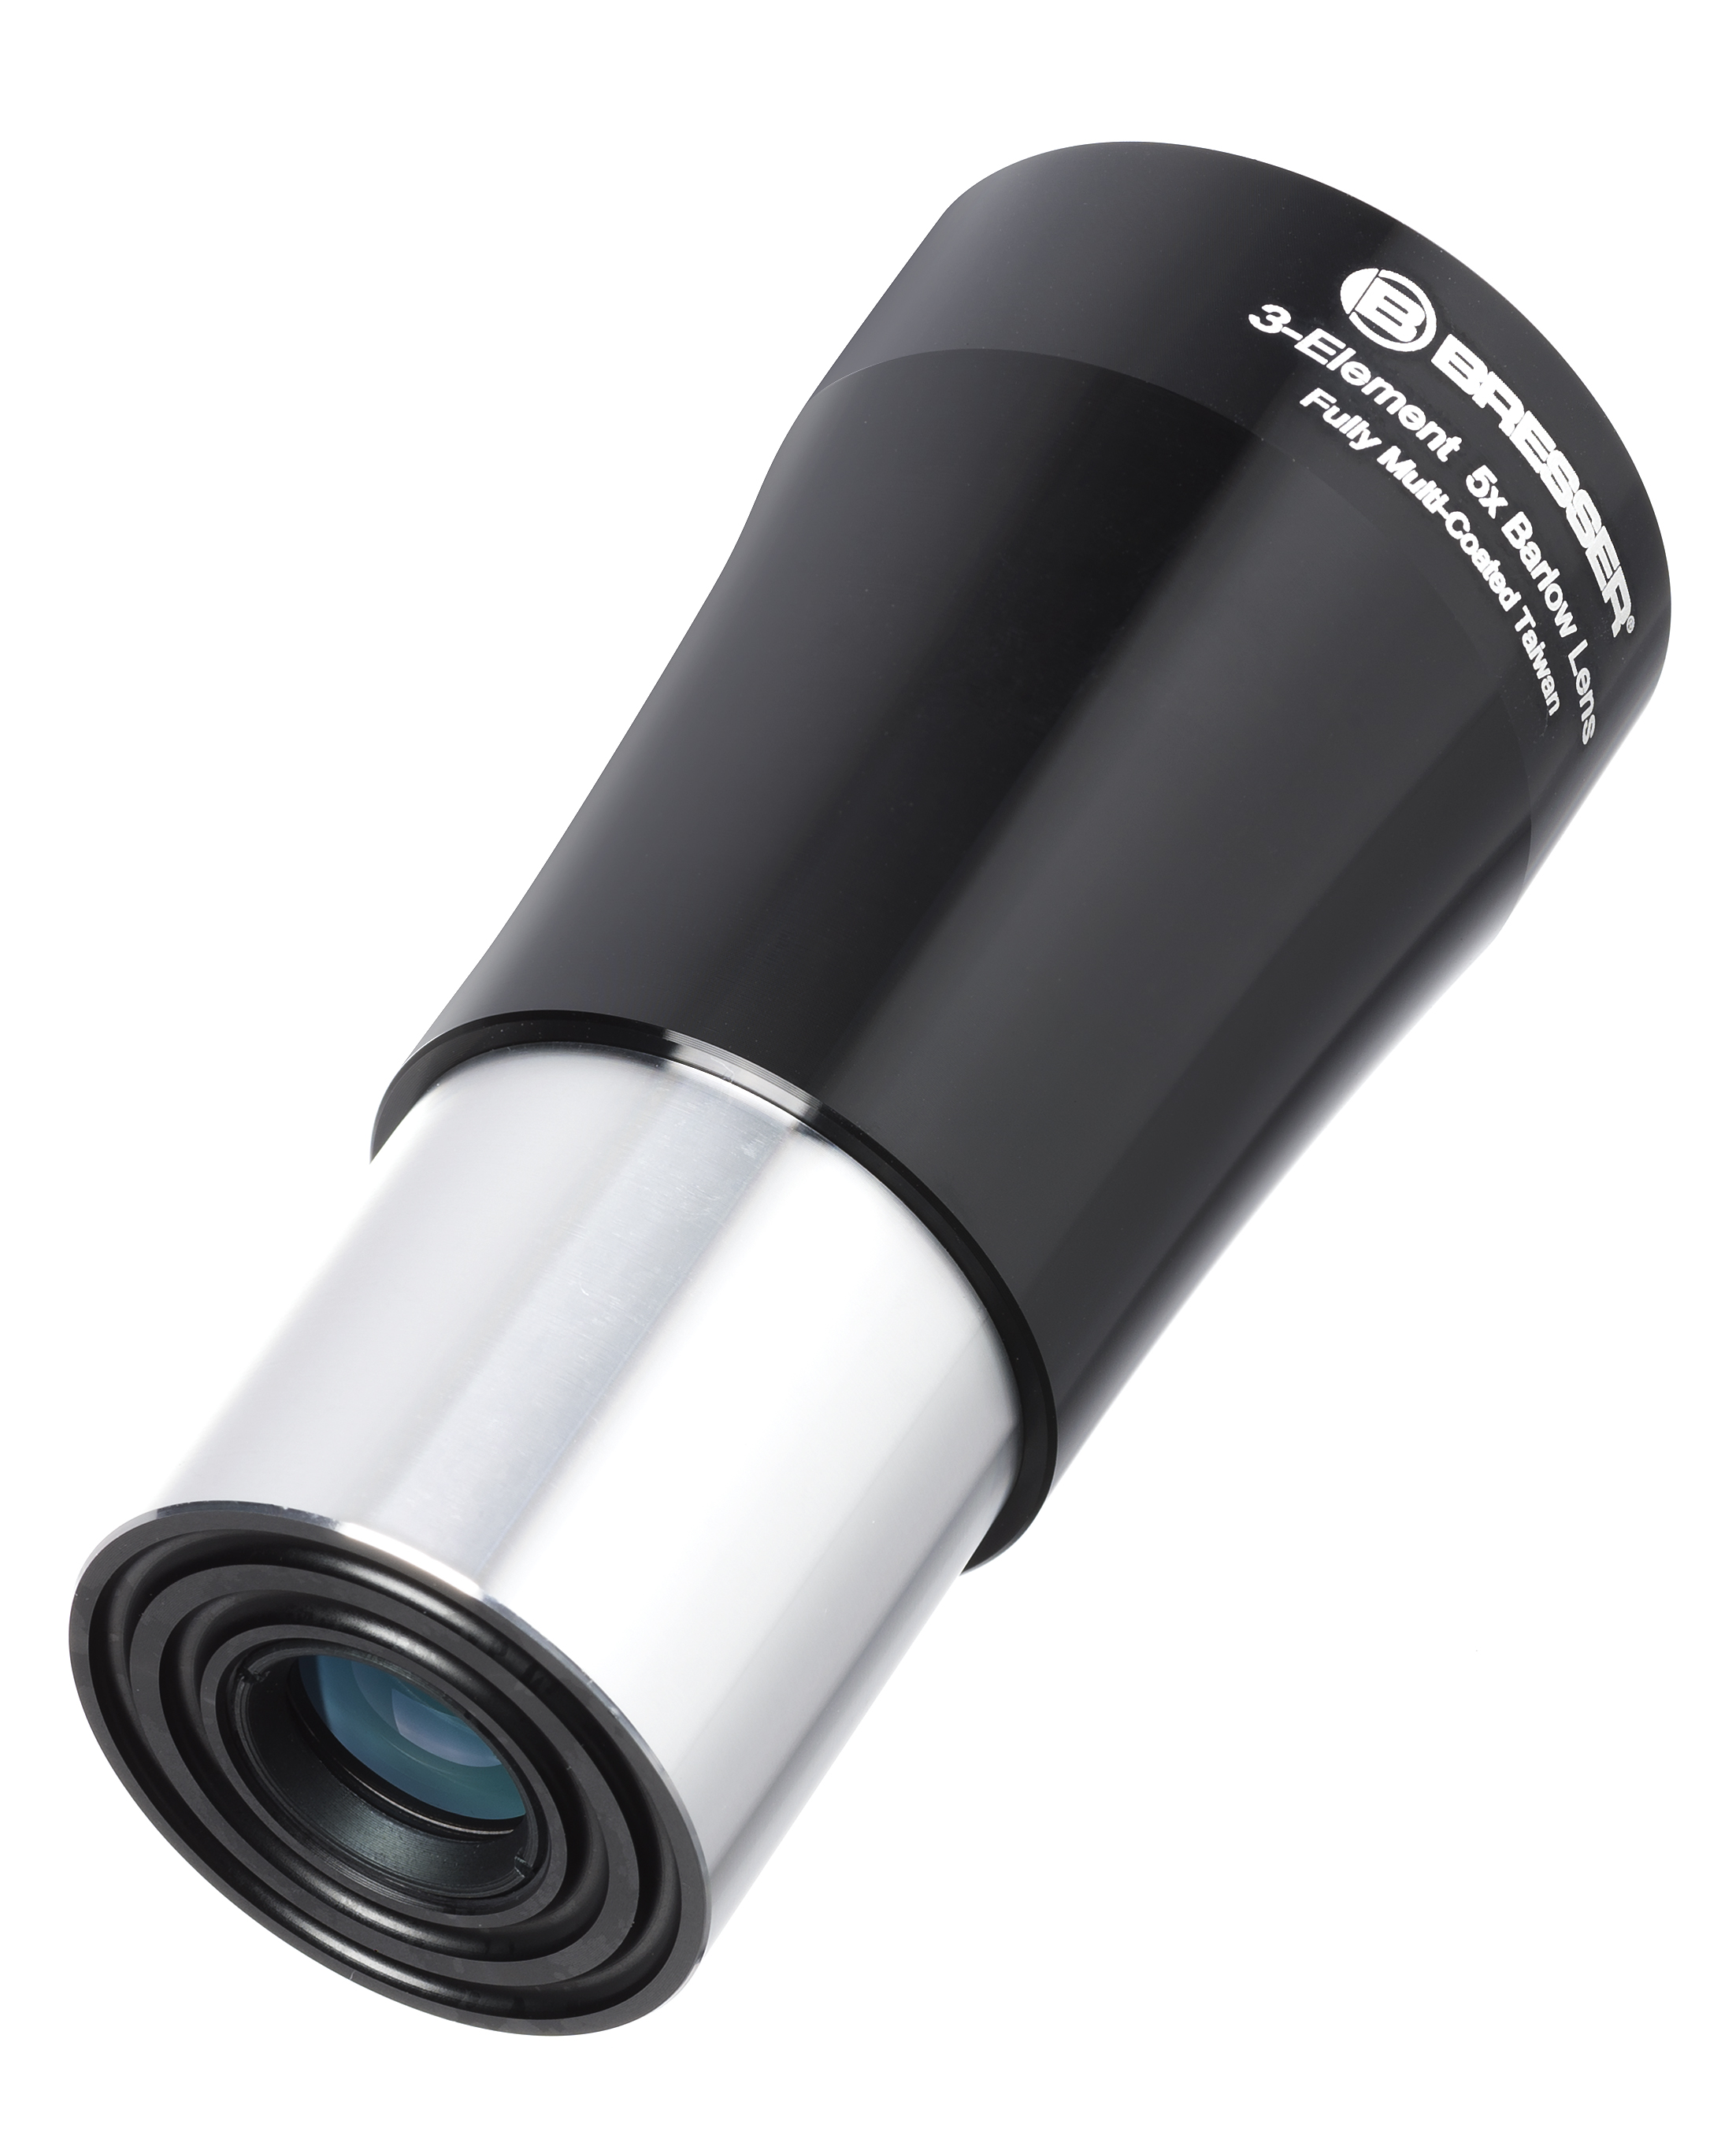 BRESSER Barlow Lens 5x (1.25")